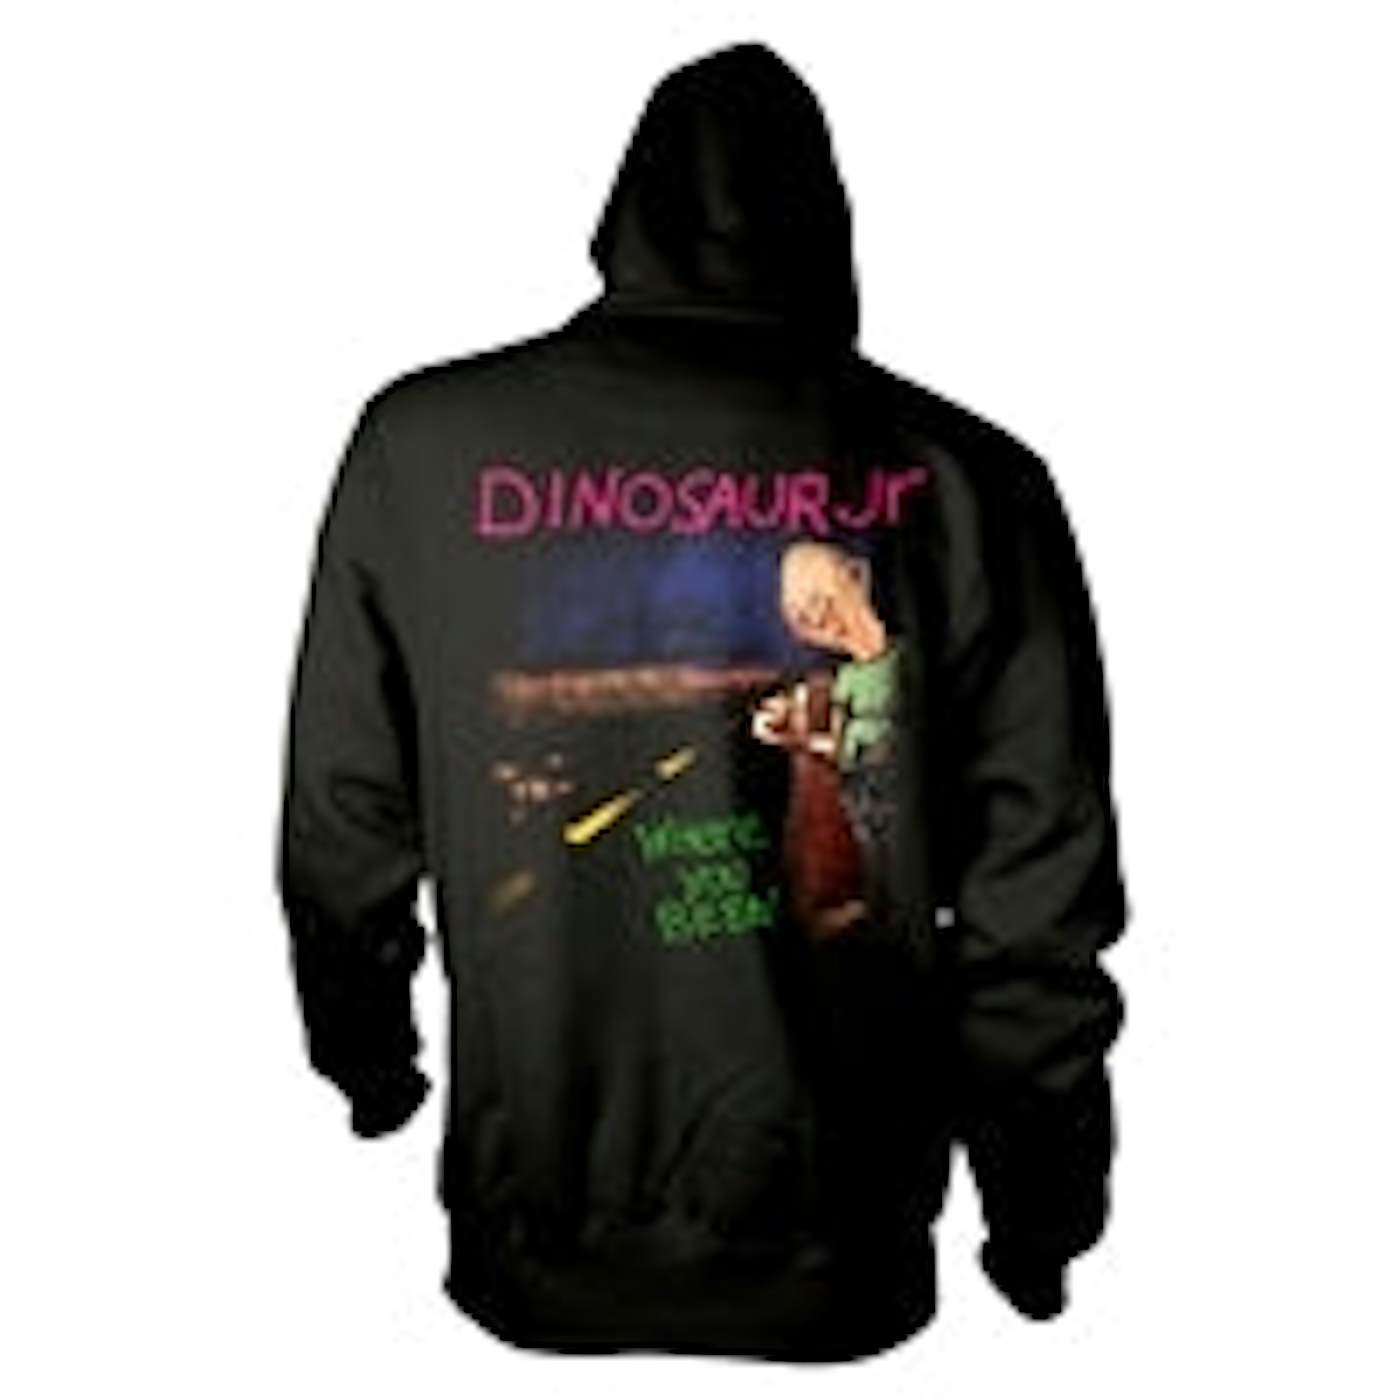 Dinosaur Jr. Hoodie - Where You Been